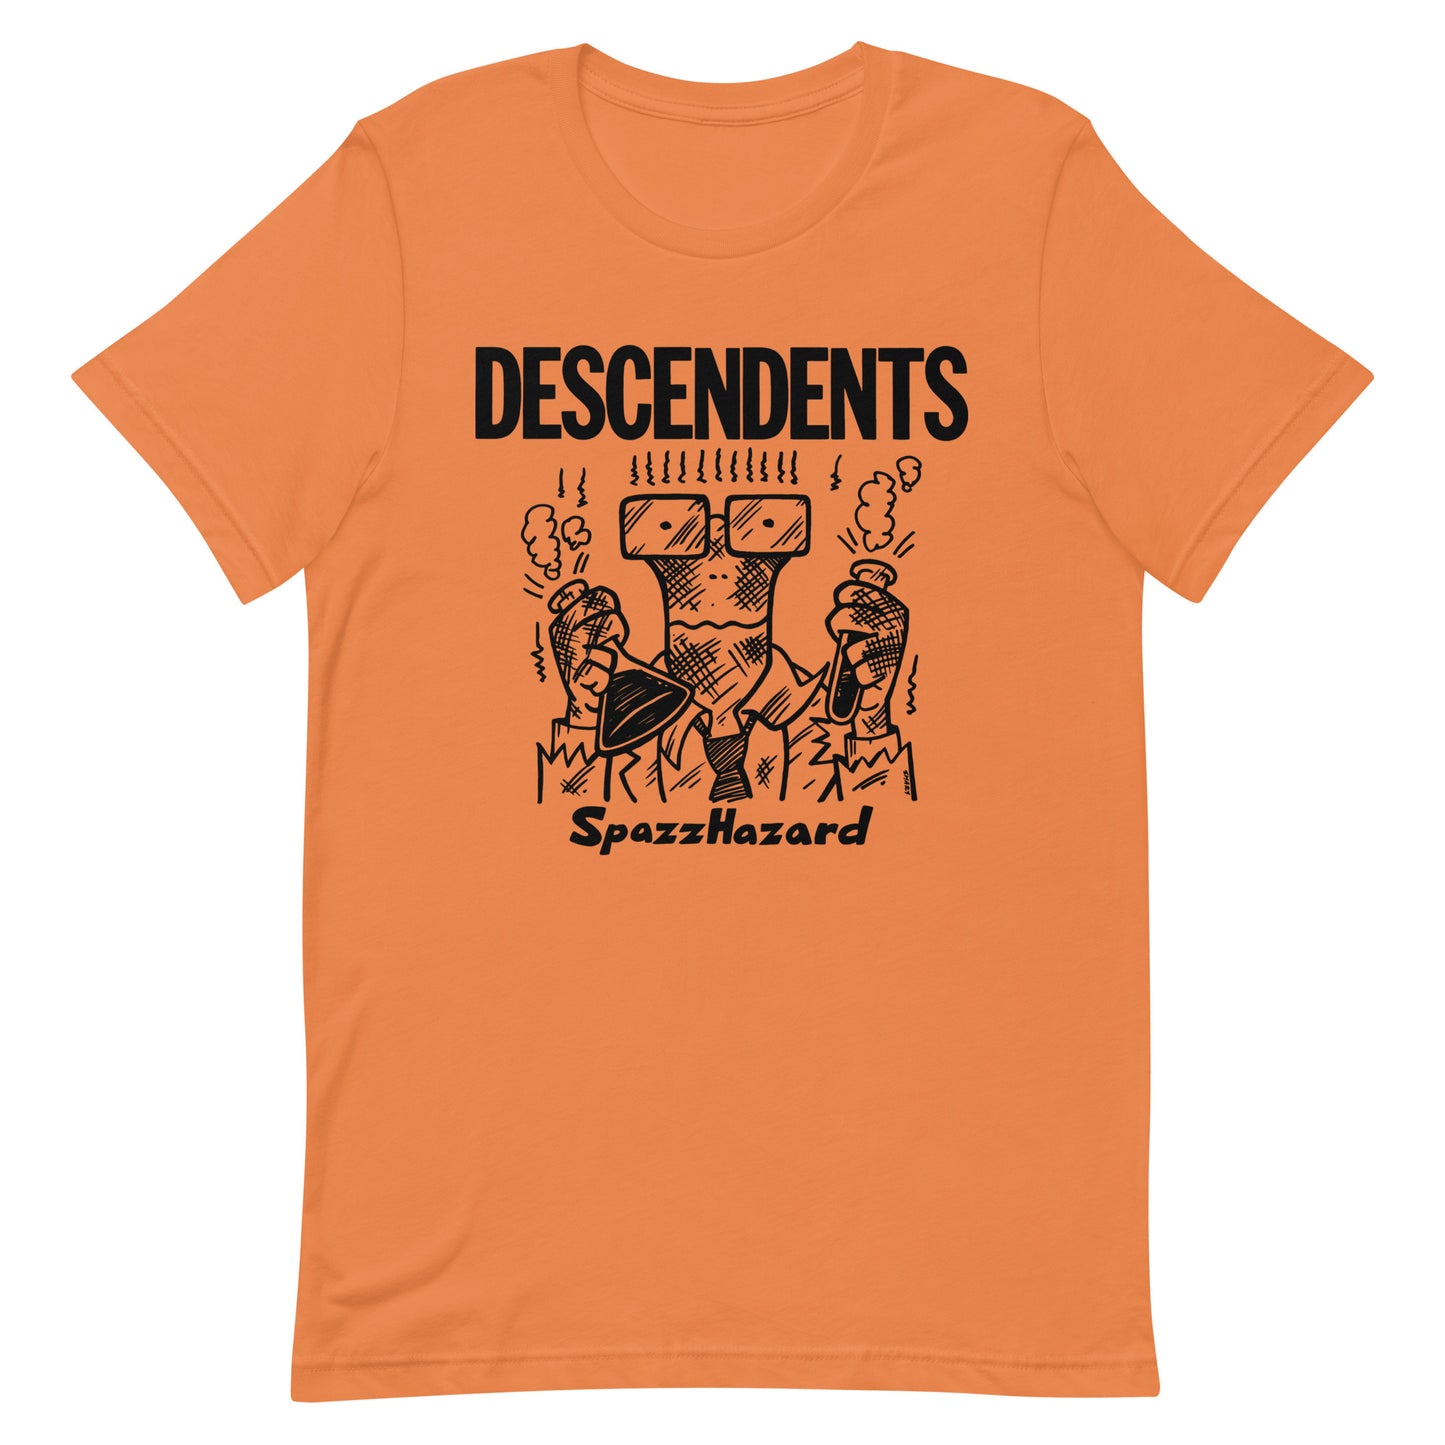 Descendents - SpazzHazard T-Shirt